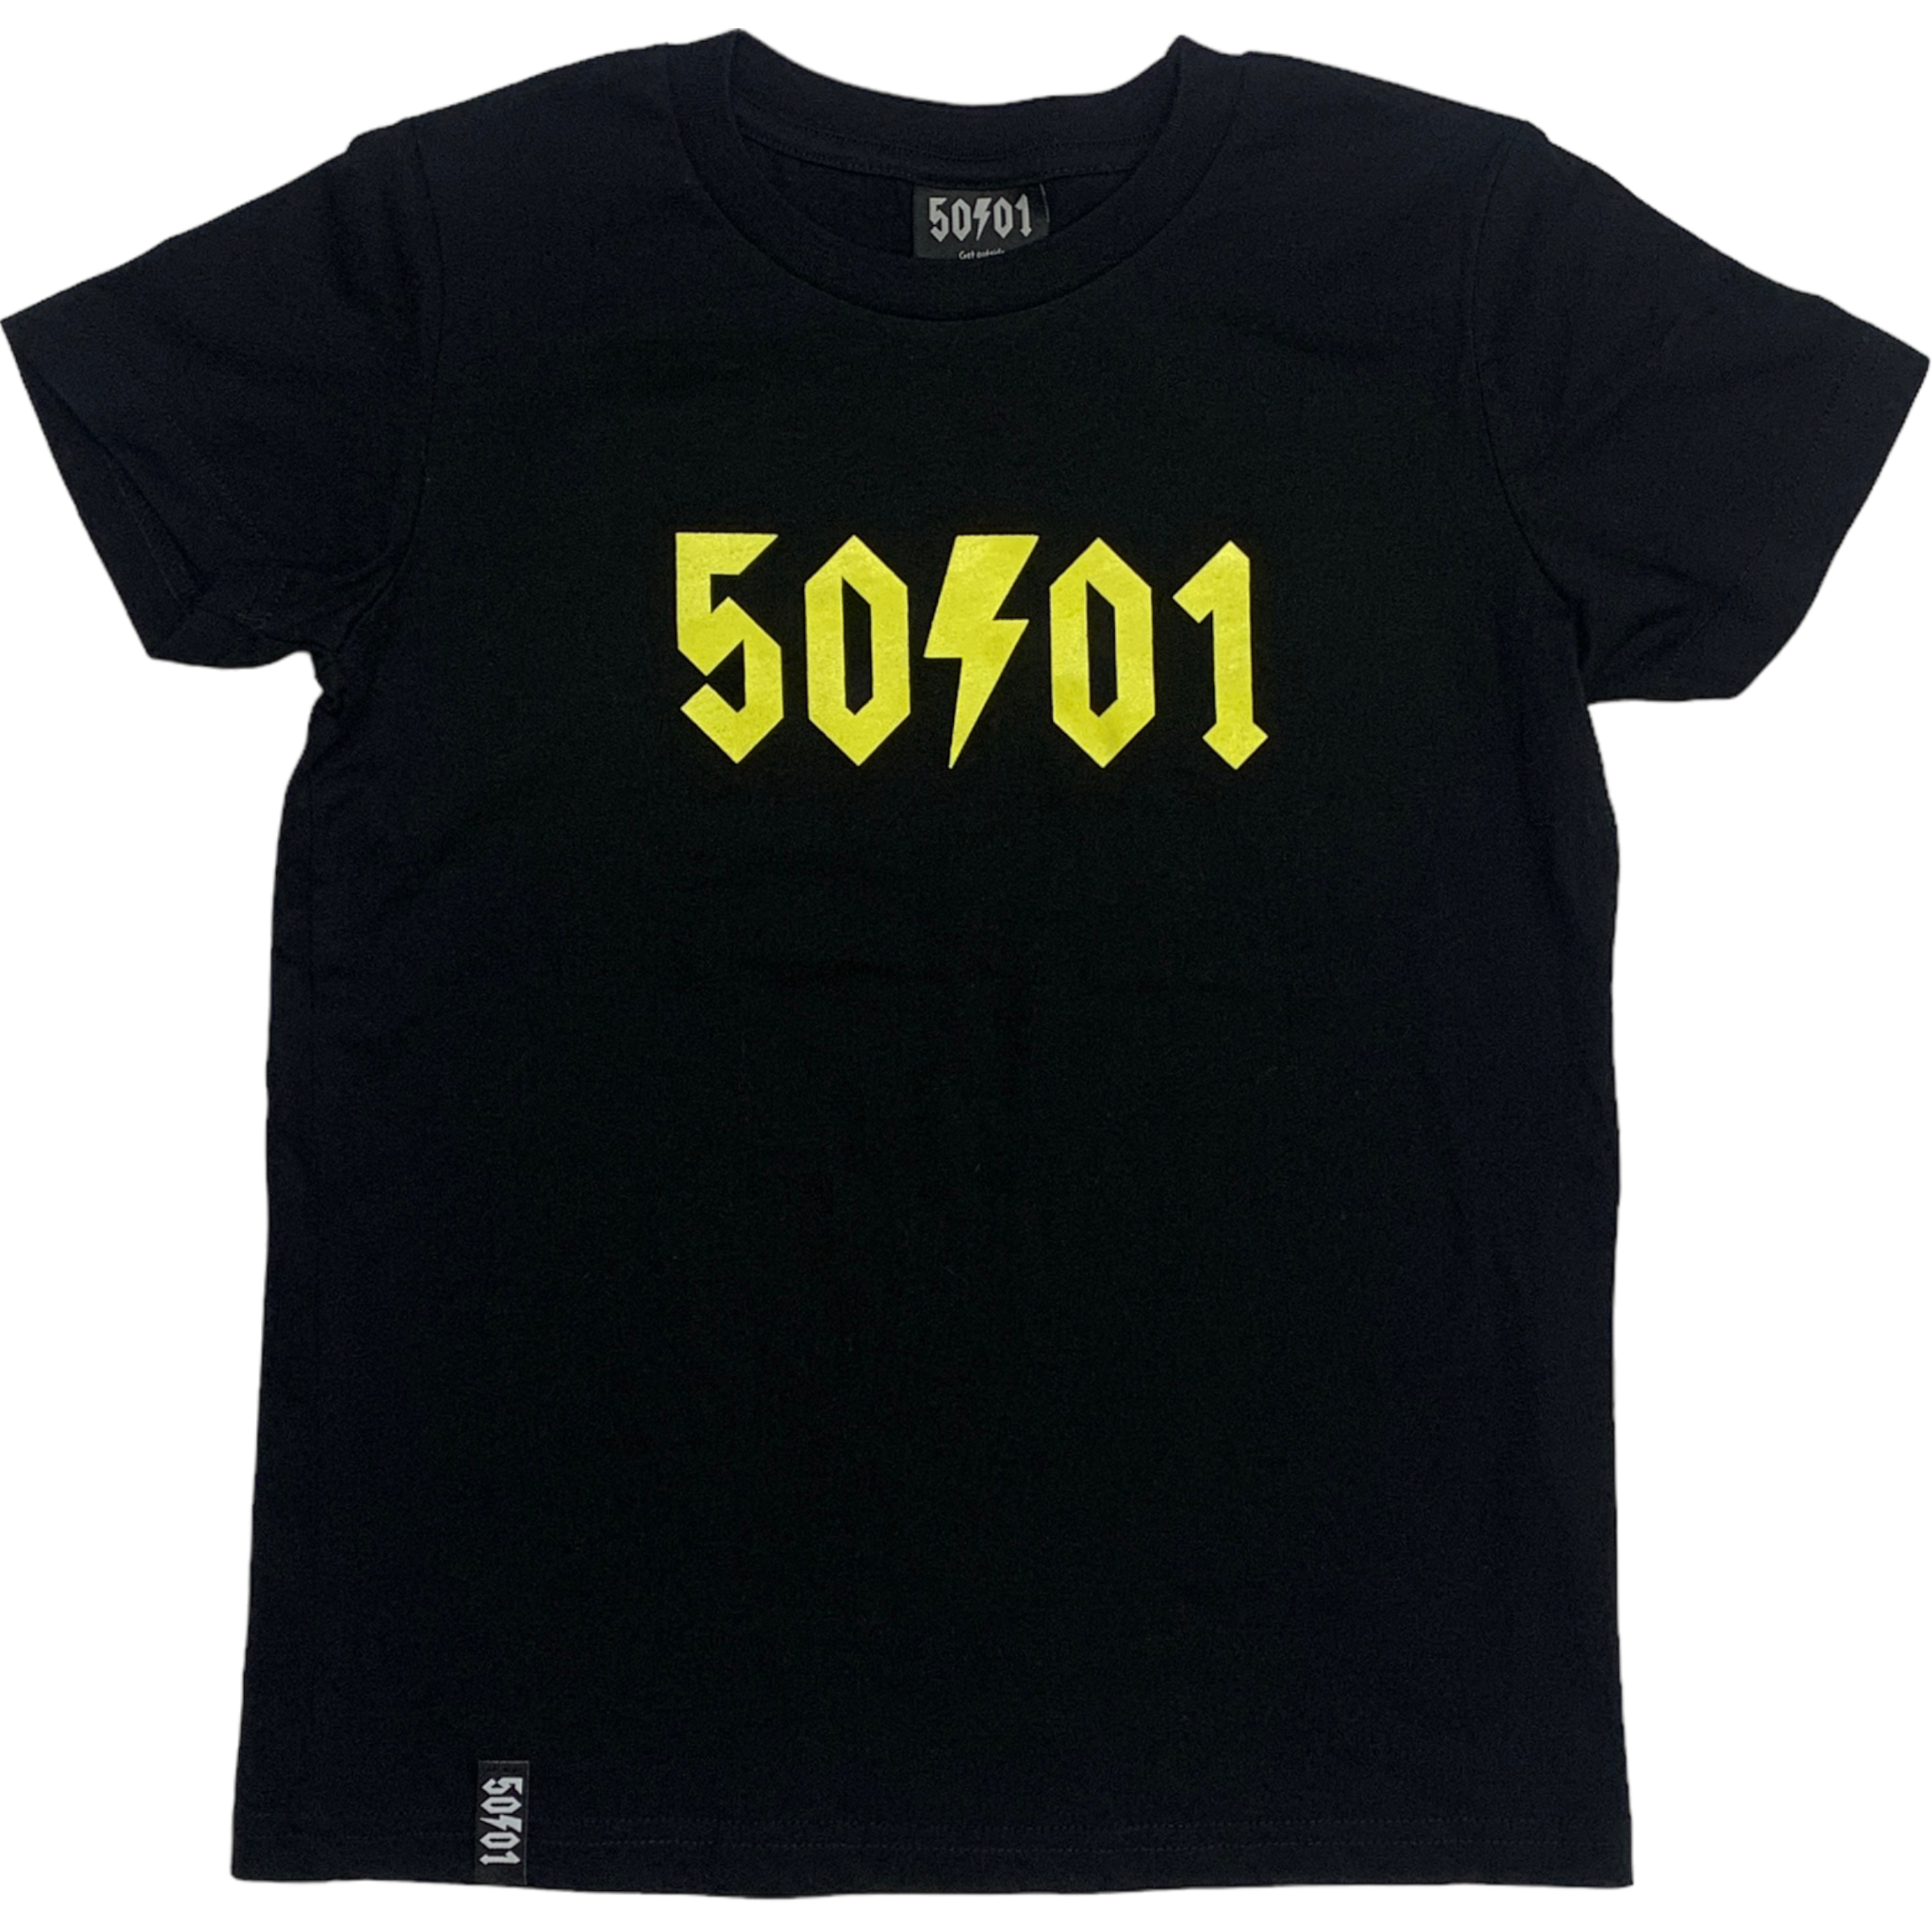 50to01 YOUTH - LOGO T-SHIRT BLACK / YELLOW